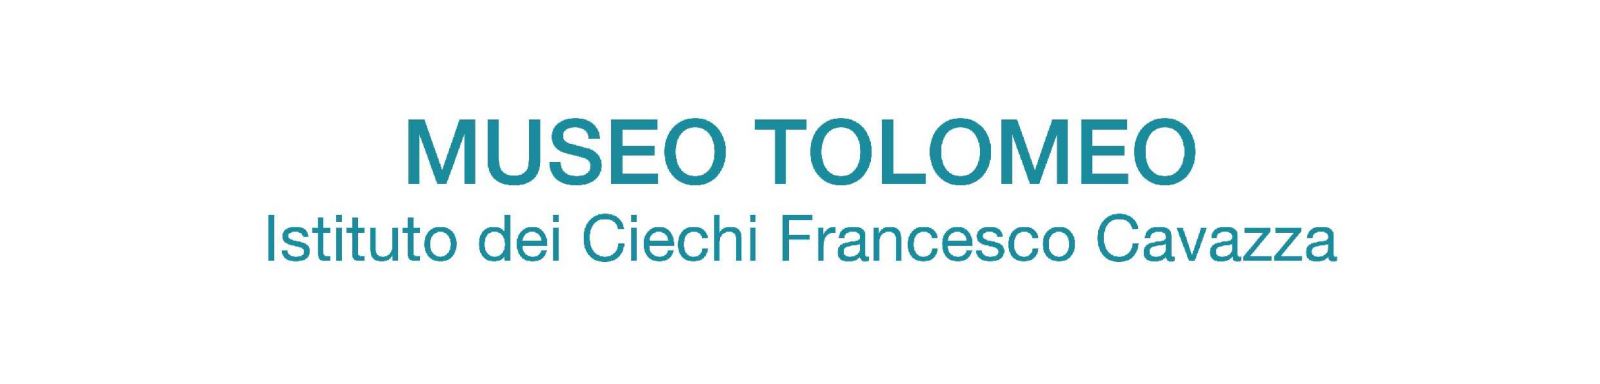 Museo Tolomeo, logo